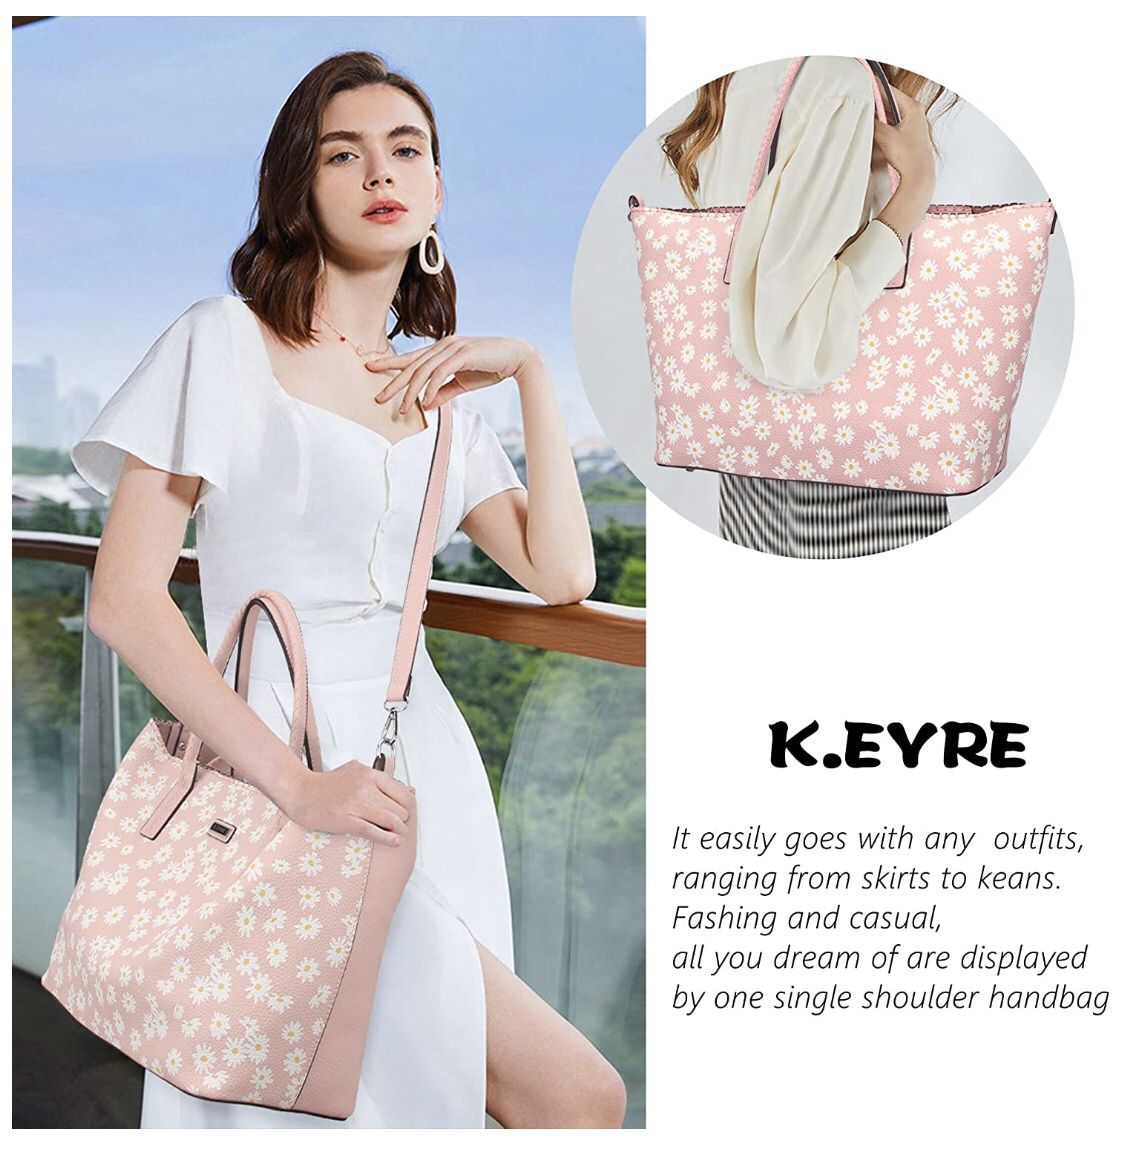 NEW K.EYRE Purses and Handbags for Women Large Shoulder Tote Satchel Bag